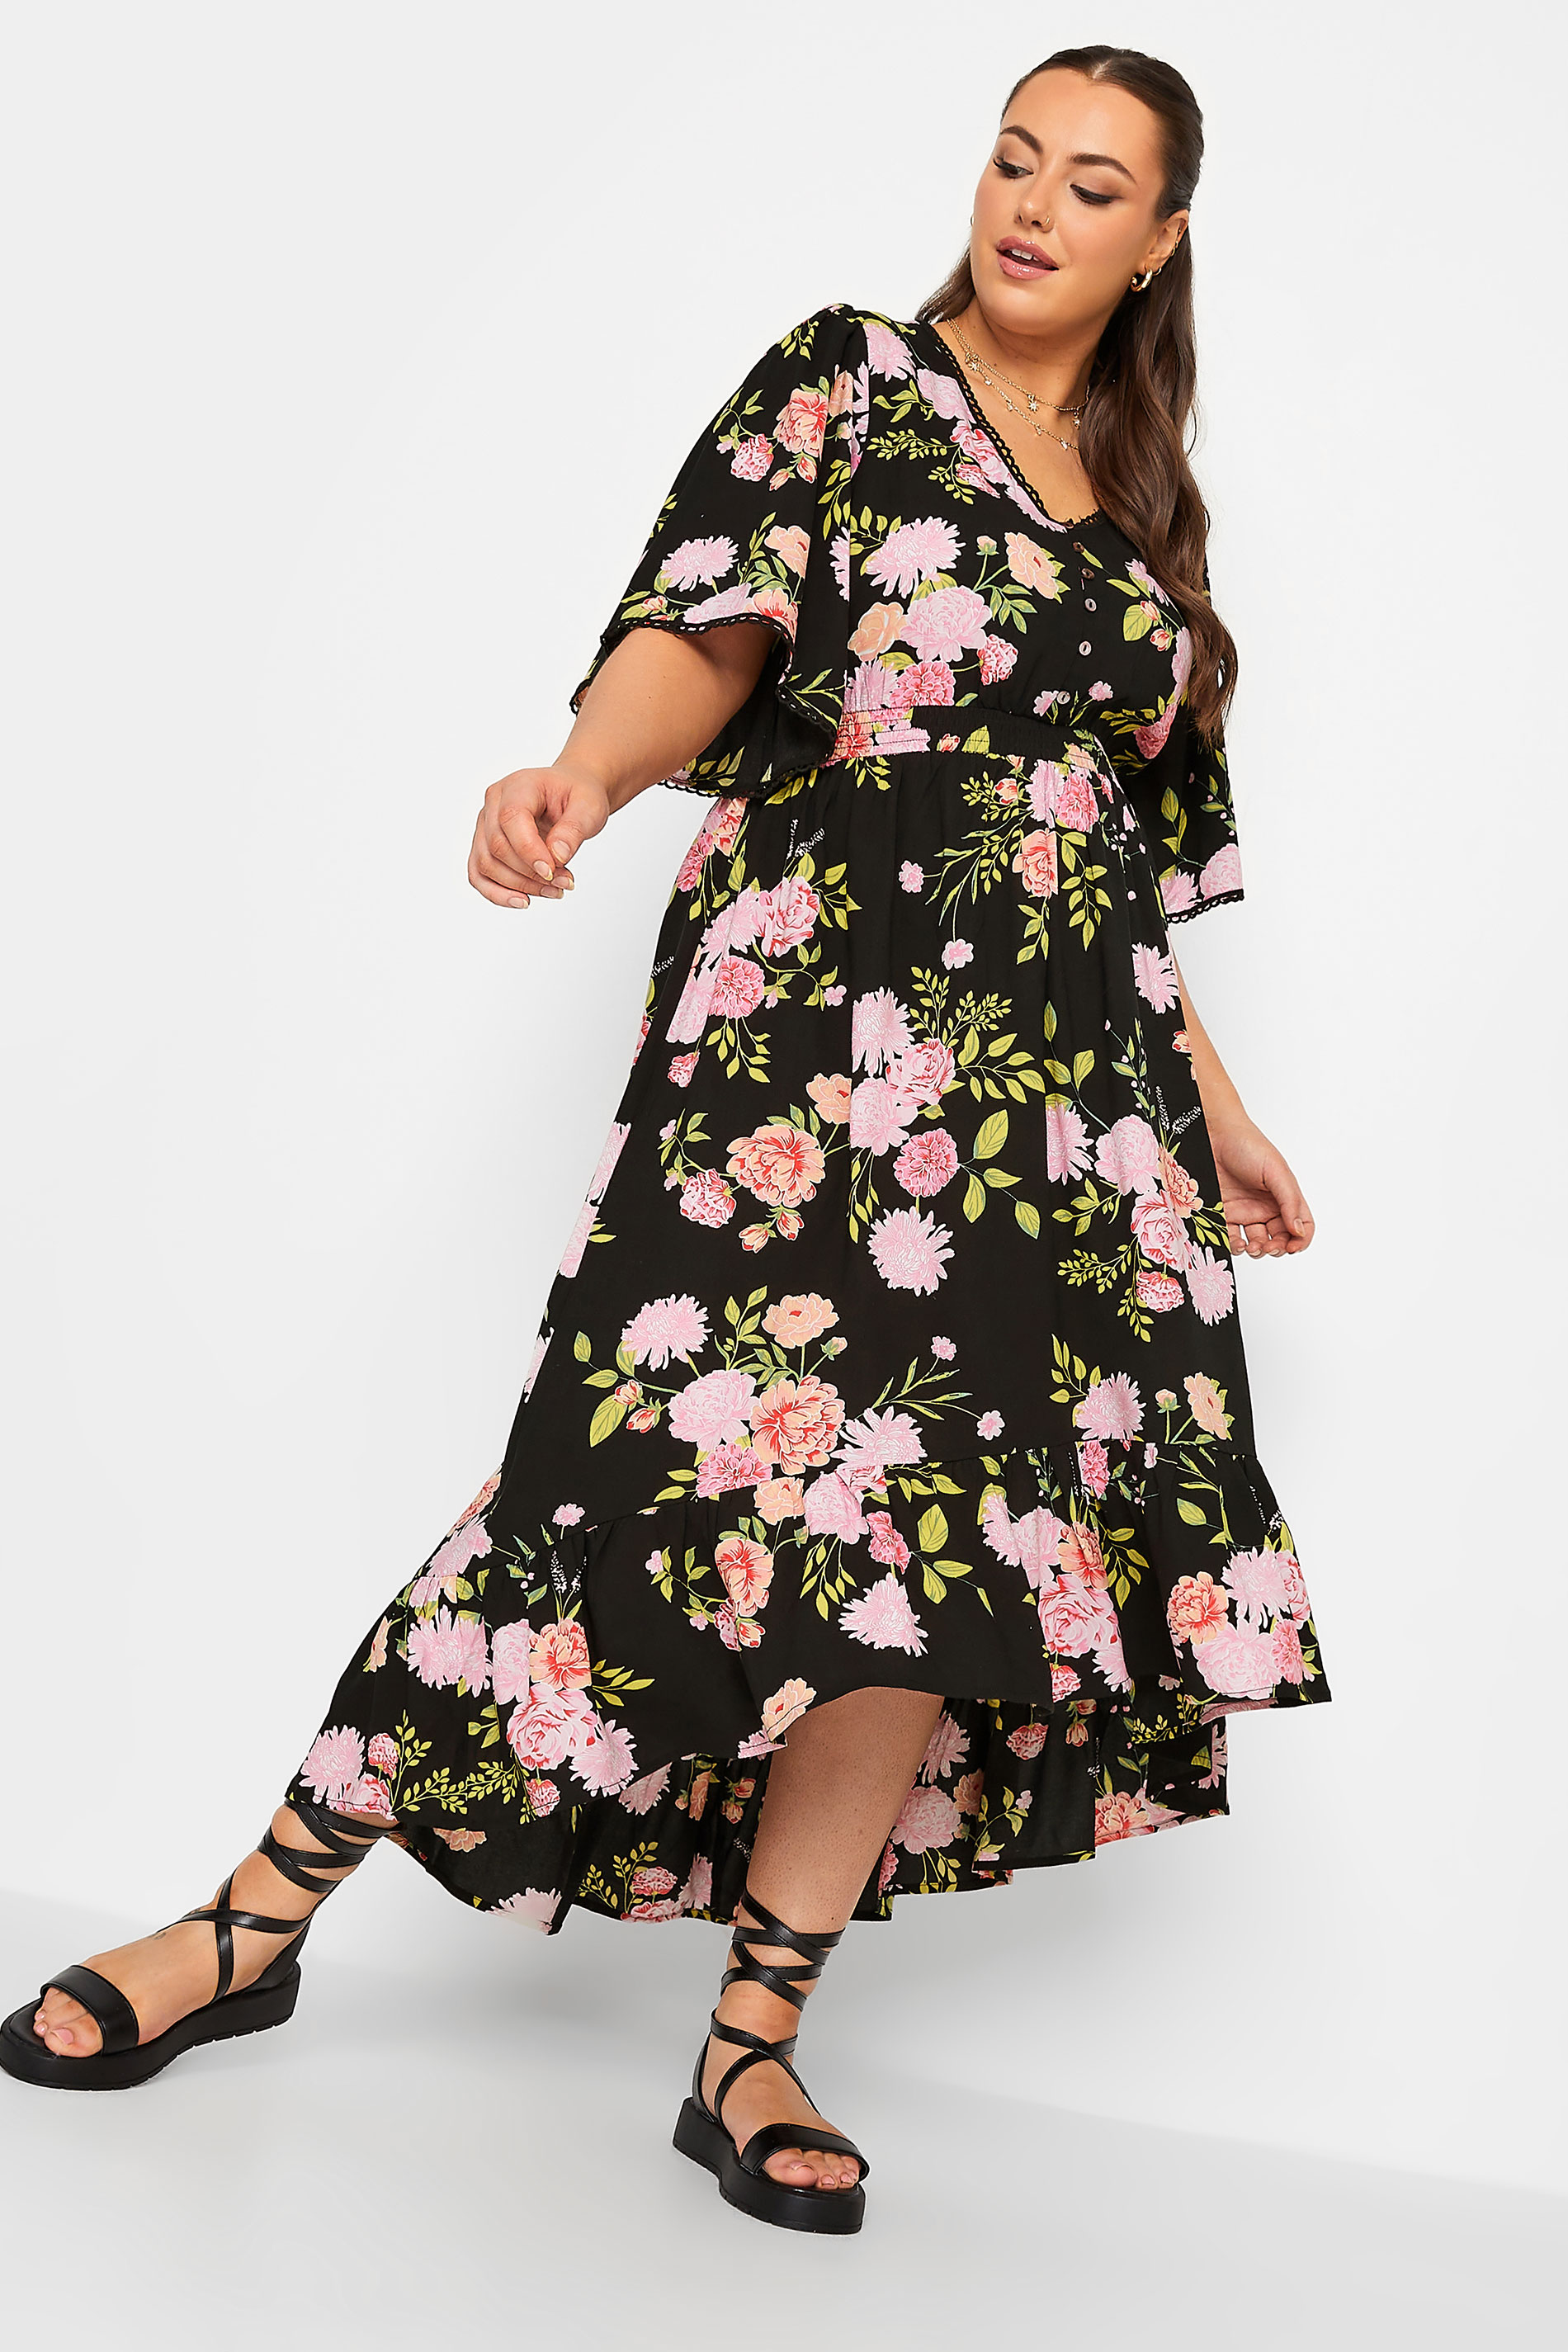 YOURS Curve Plus Size Black Floral Maxi Dress | Yours Clothing  2